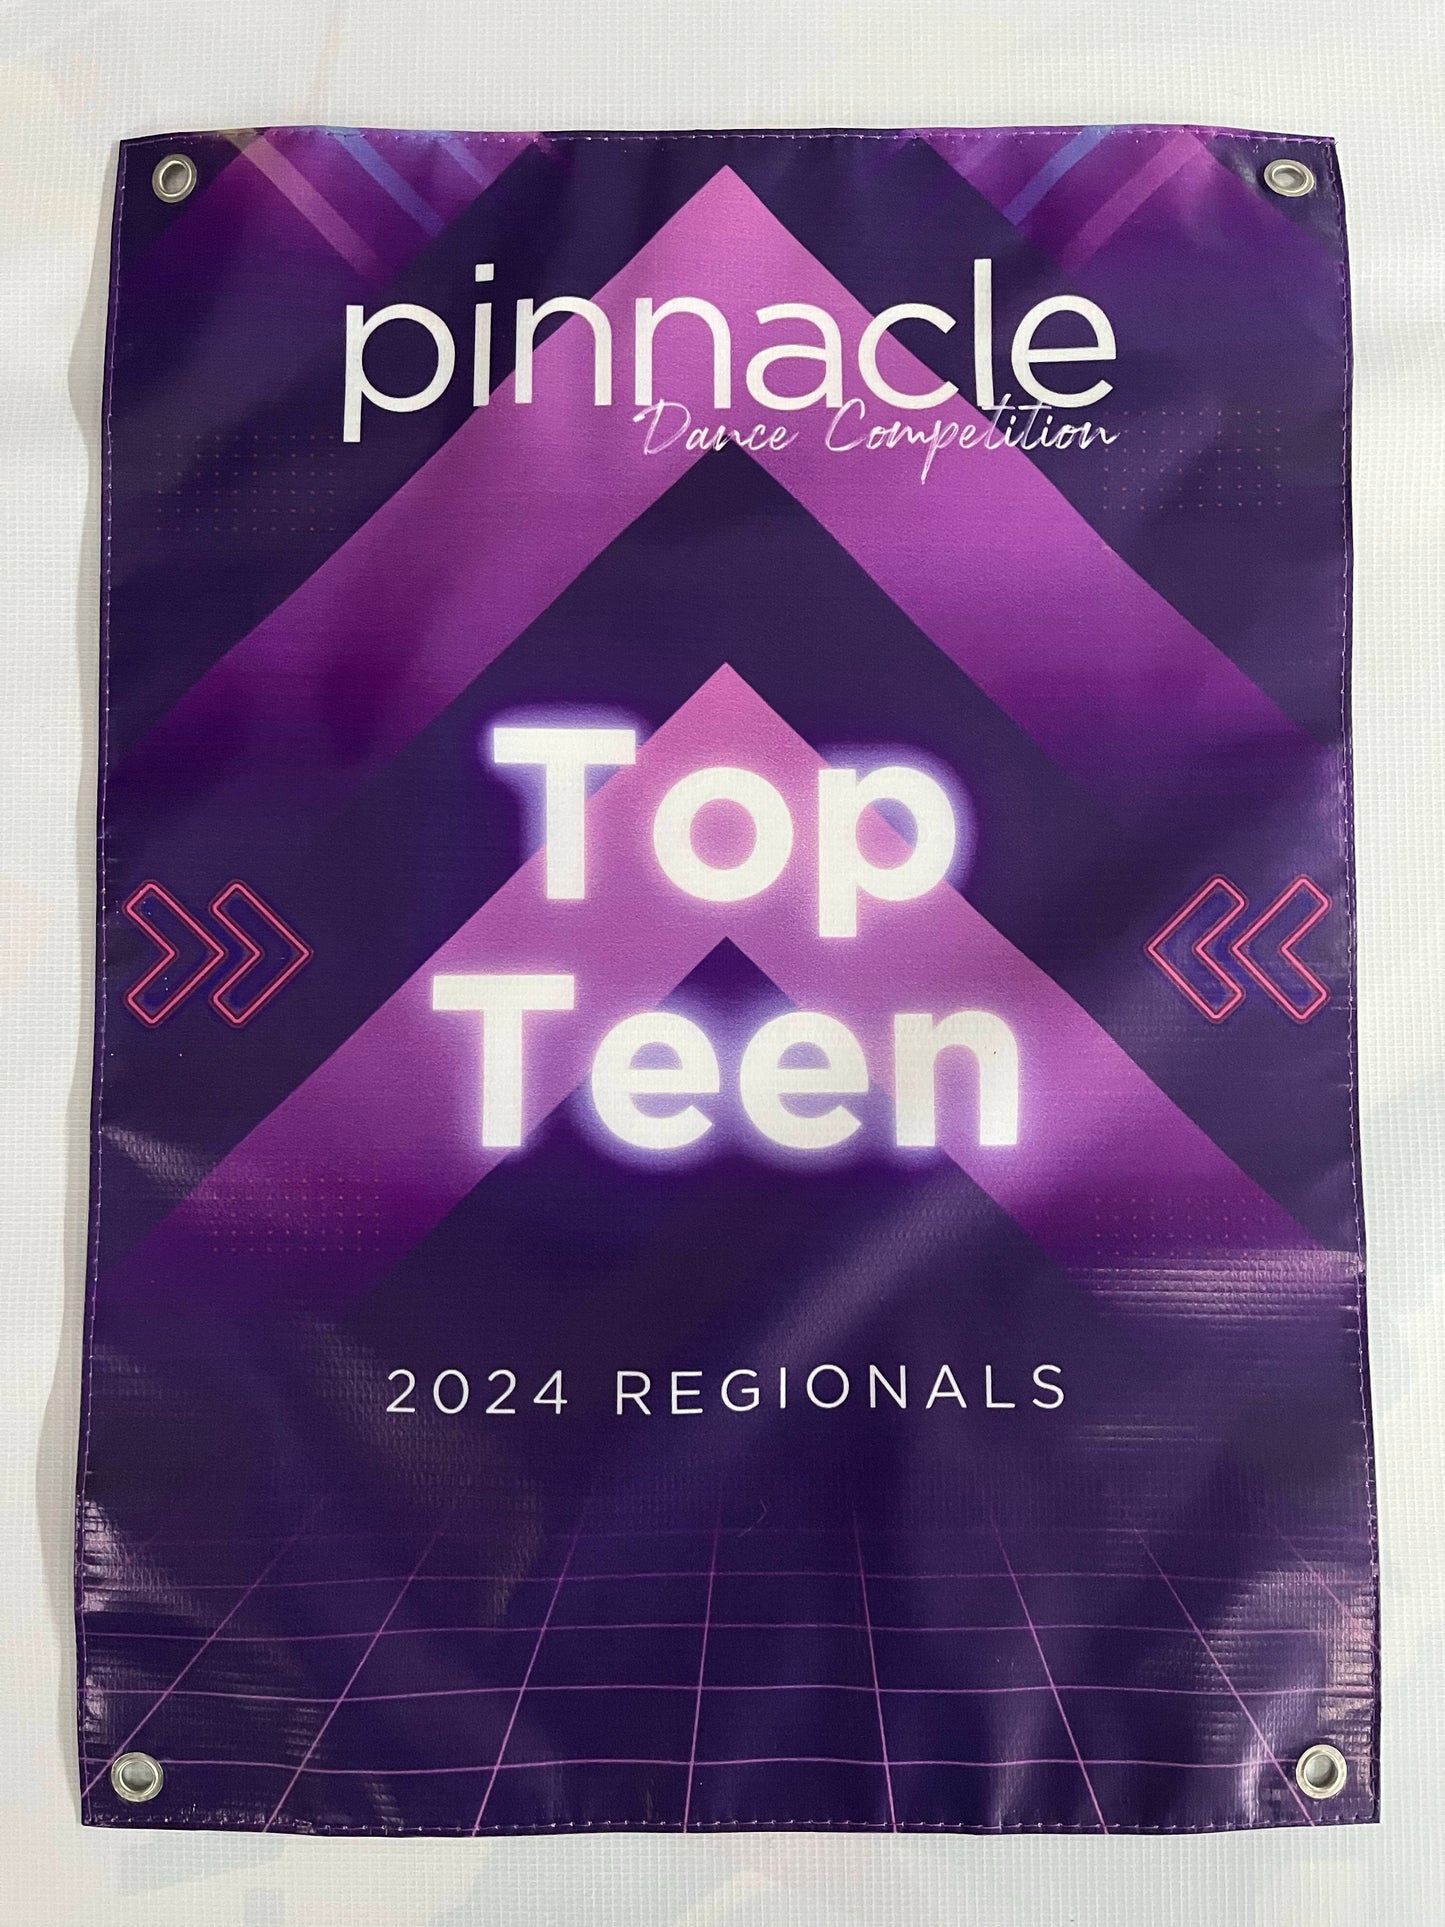 2024 Regionals Banners